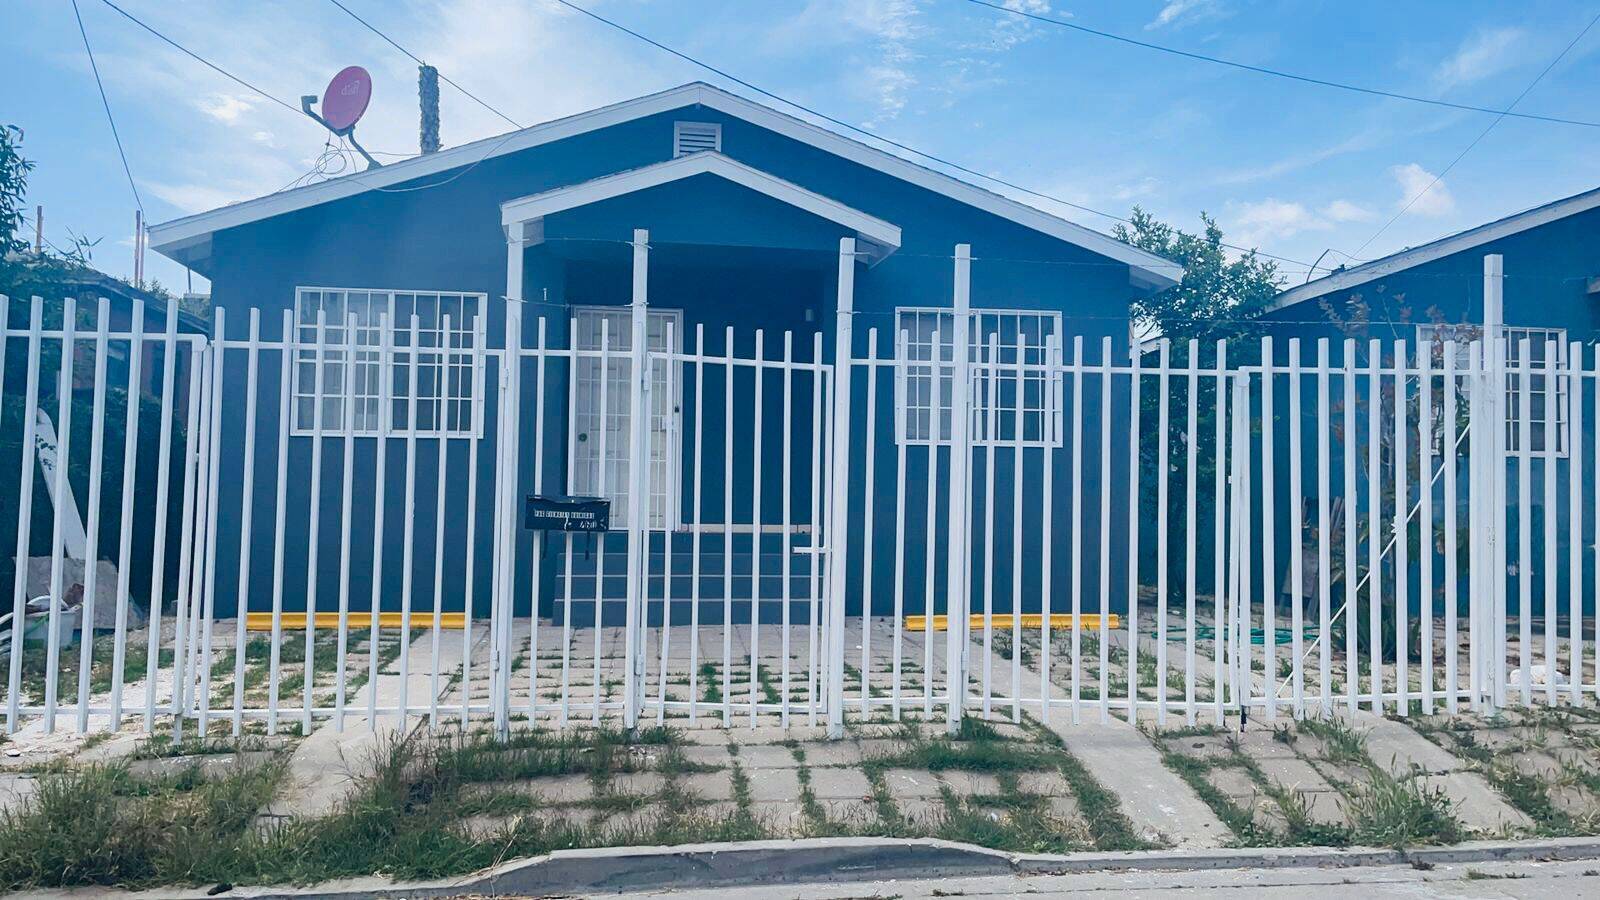 #537 - Casa para Renta en Tijuana - BC